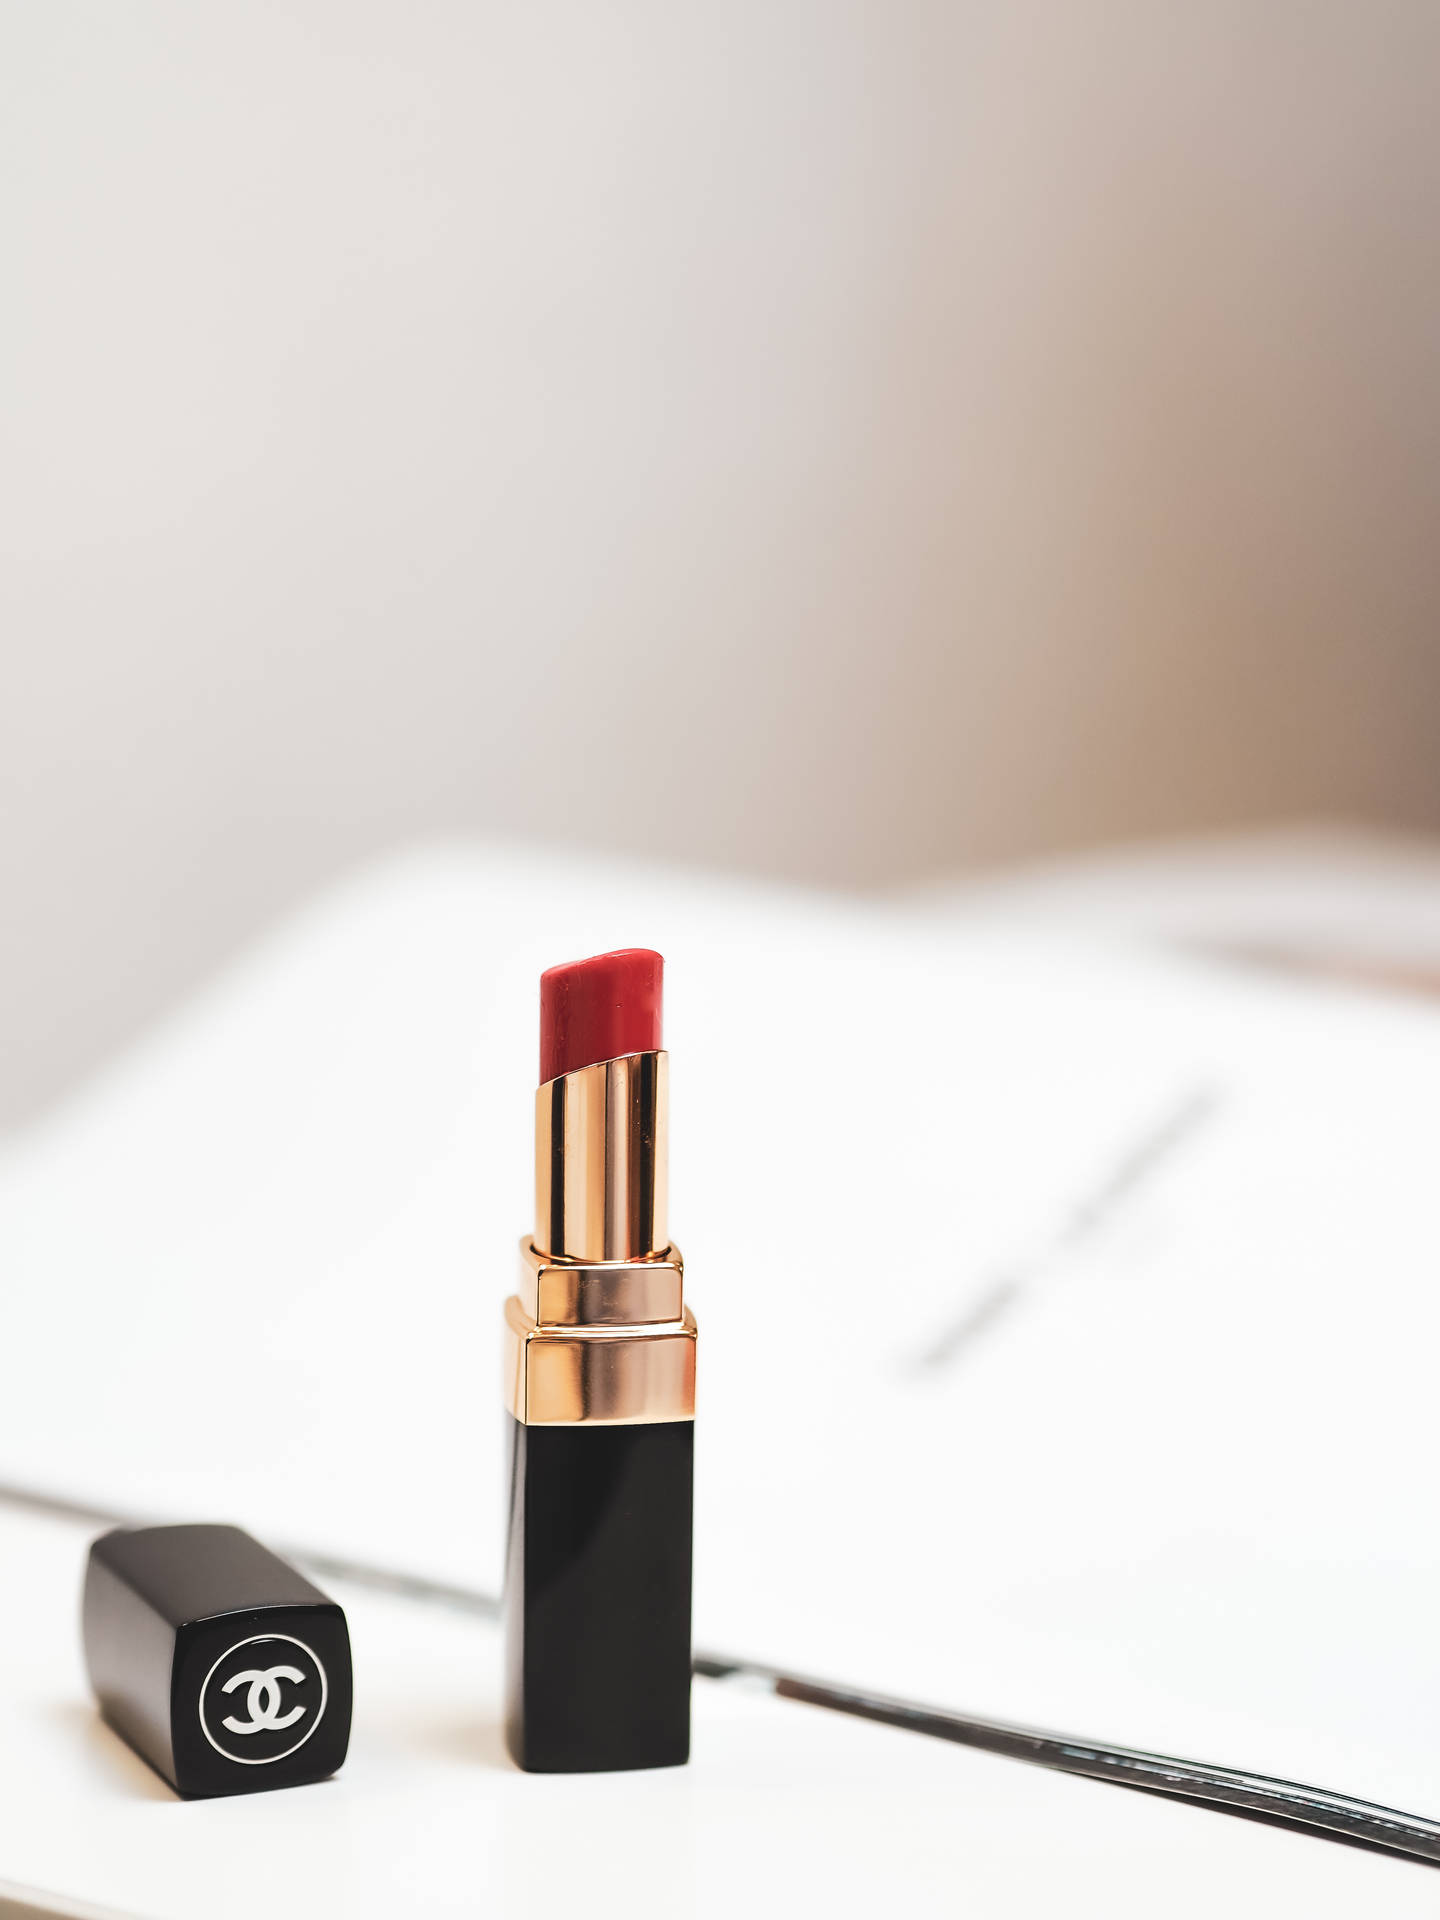 Chanel Lipstick Close-up Background